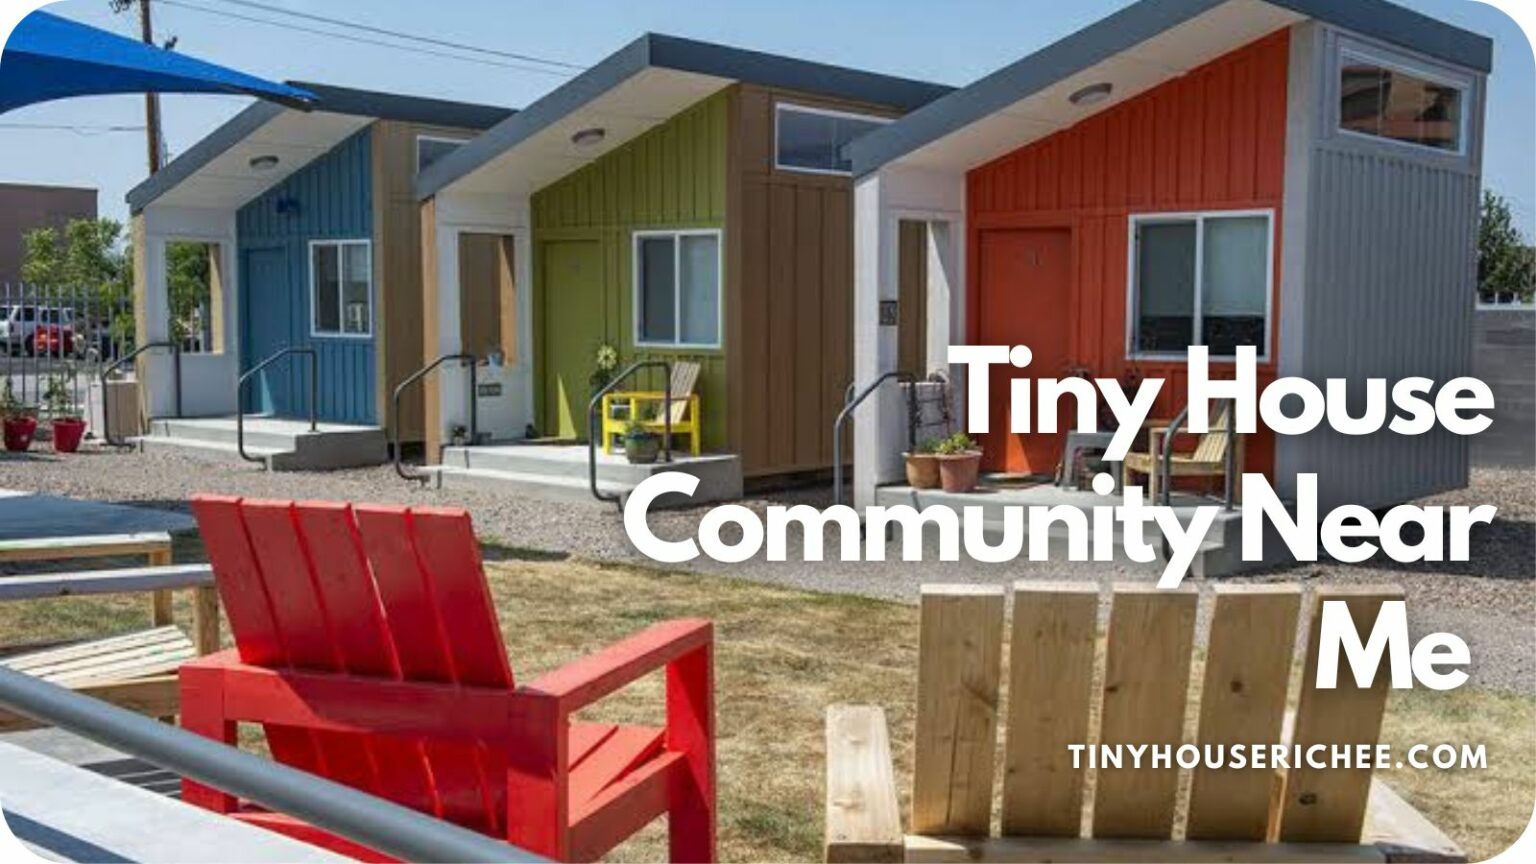 Tiny home communities Texas | Tiny House Richee